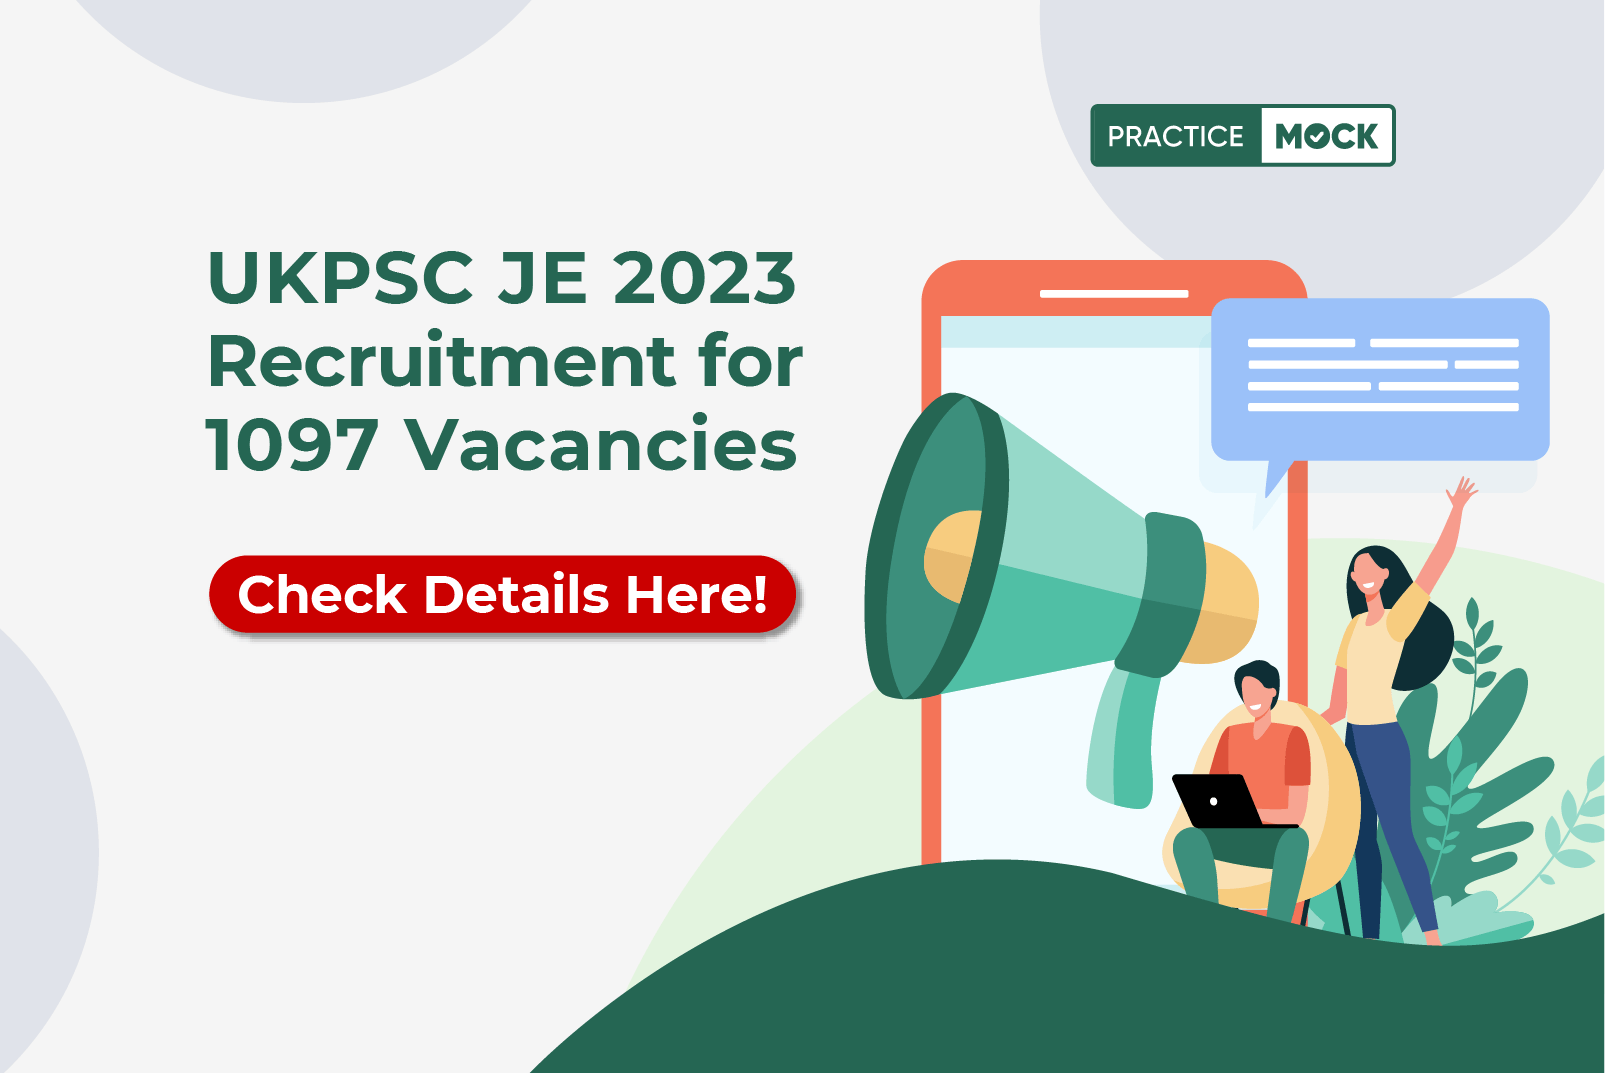 UKPSC JE Recruitment 2023 for 1097 Vacancies, Check All Details!